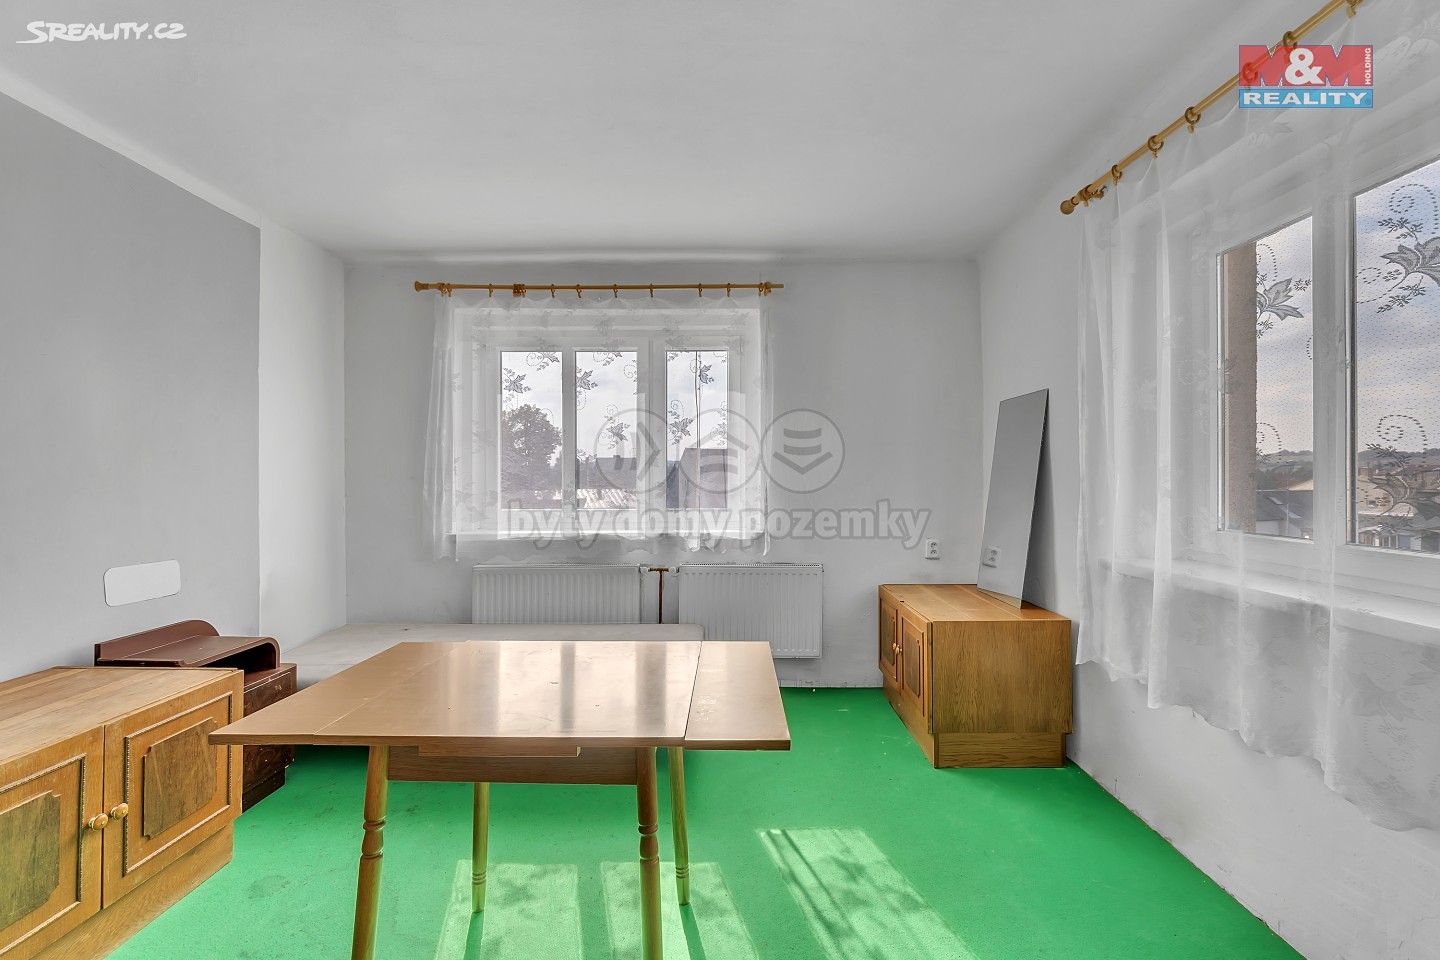 Prodej  rodinného domu 156 m², pozemek 414 m², Bakov nad Jizerou, okres Mladá Boleslav